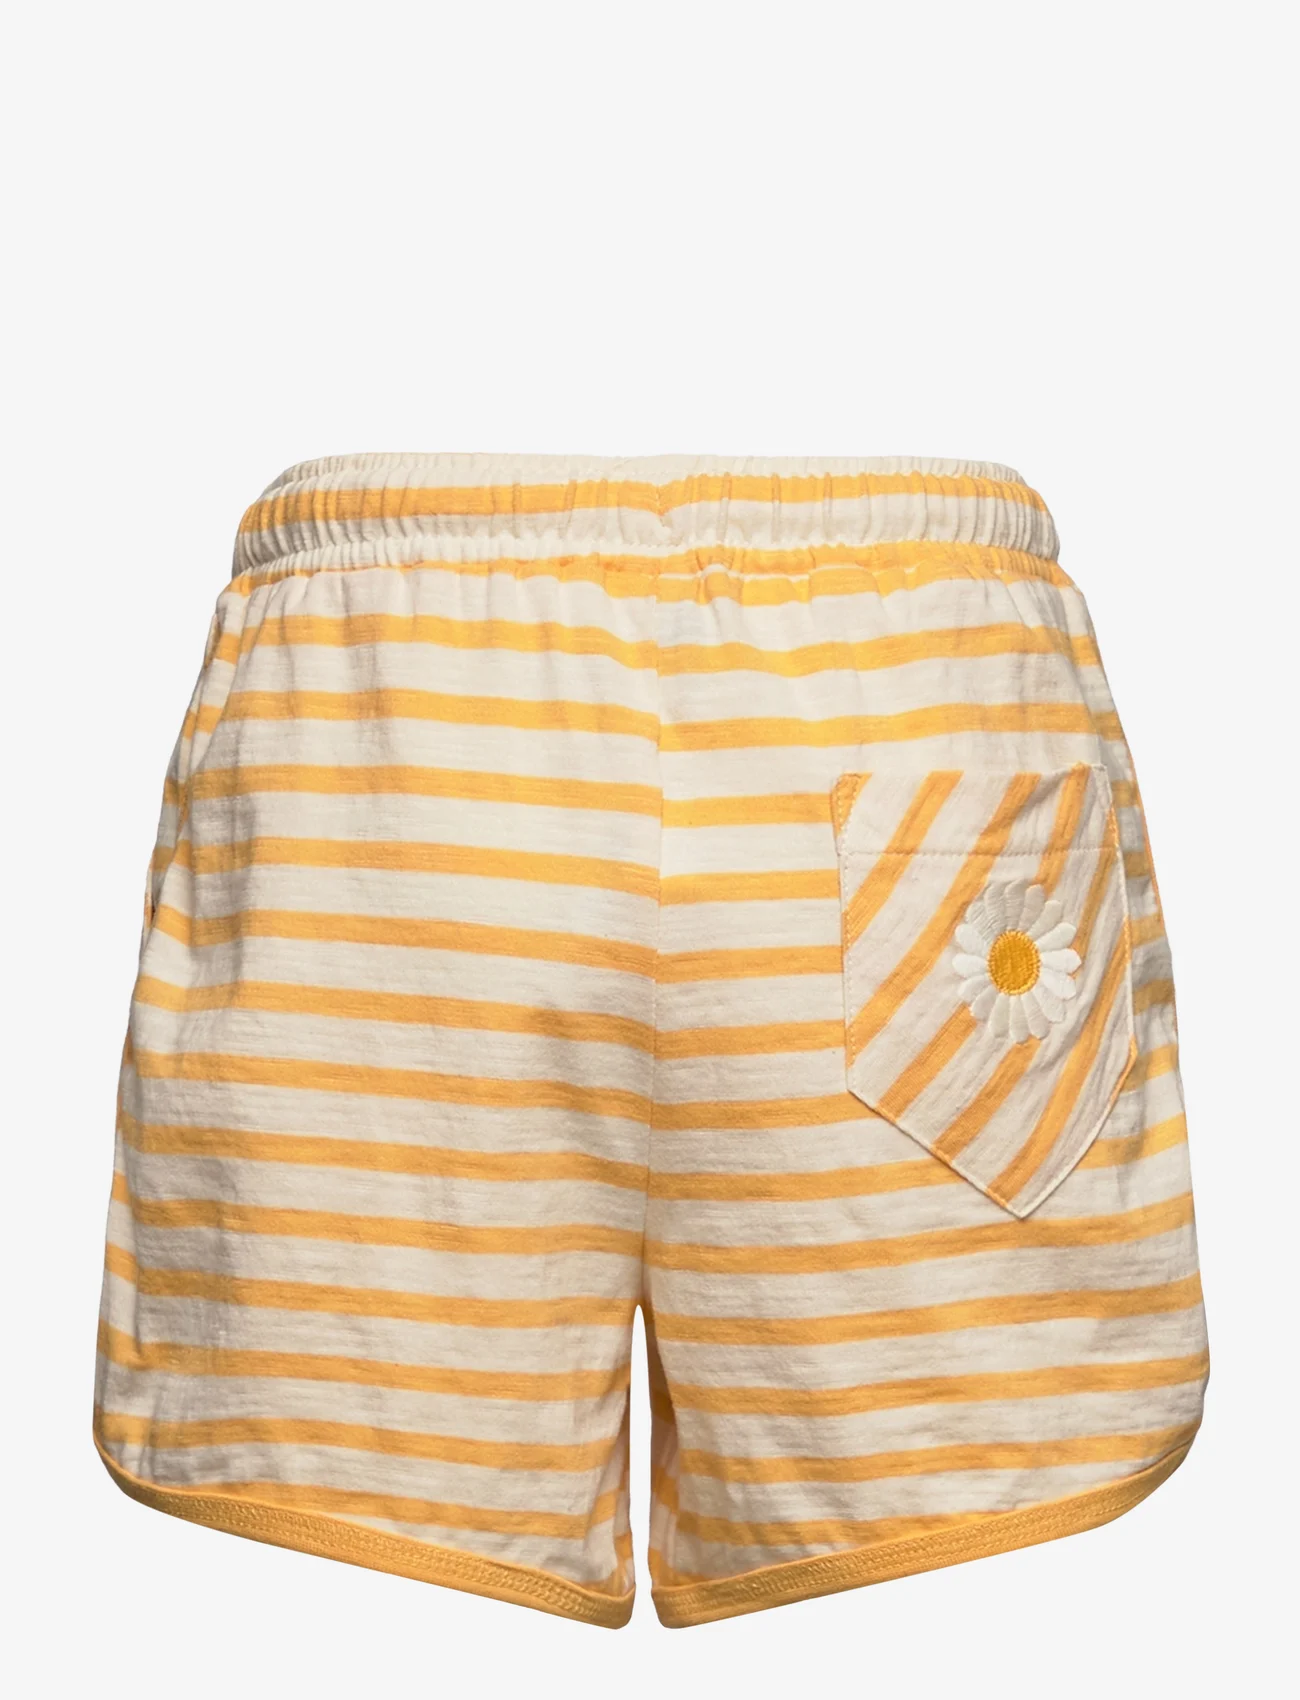 ebbe Kids - Sofia shorts - mjukisshorts - yellow stripe - 1